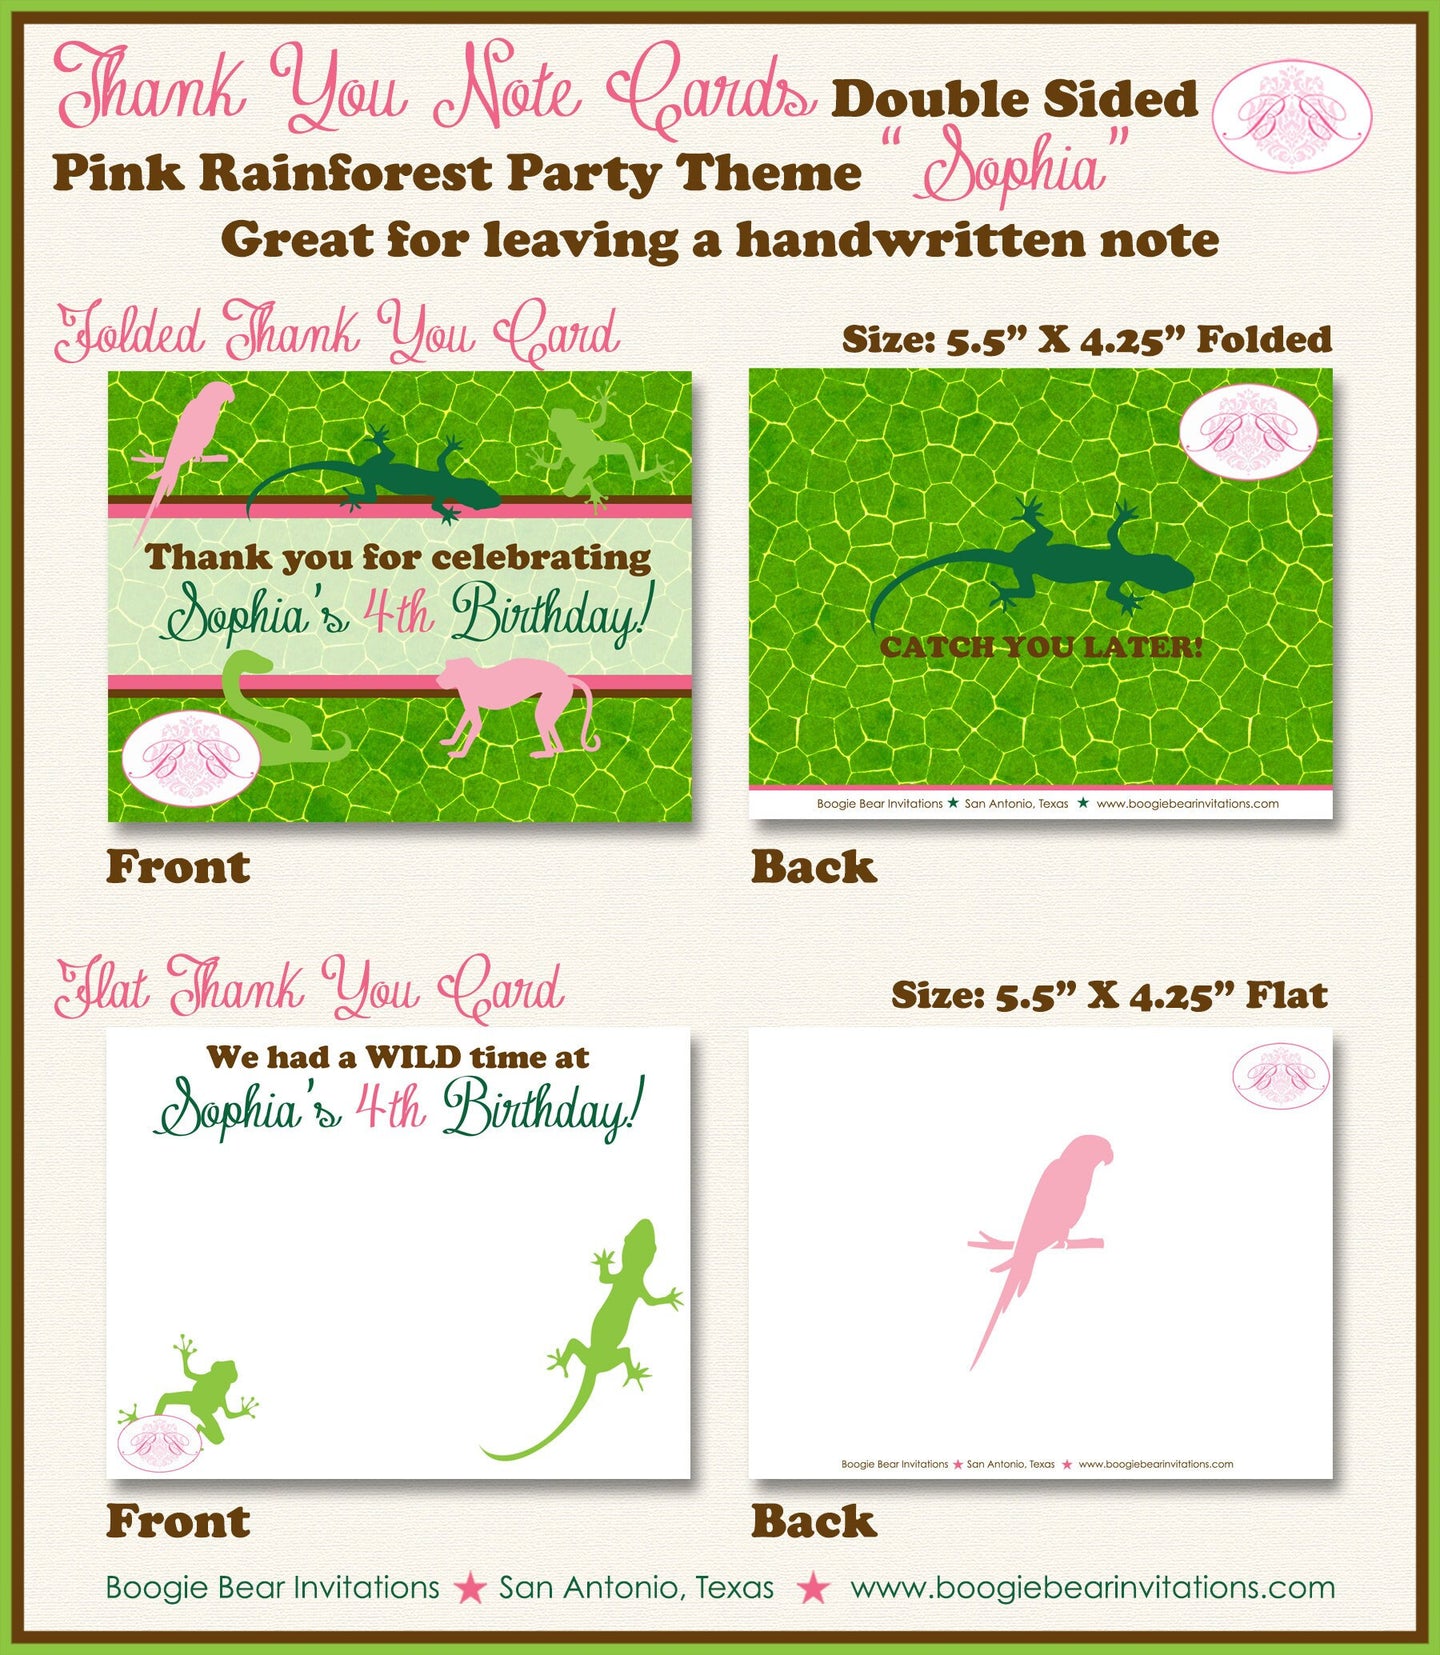 Pink Rainforest Party Thank You Card Birthday Girl Frog Green Lizard Rain Forest Amazon Jungle Boogie Bear Invitations Sophia Theme Printed